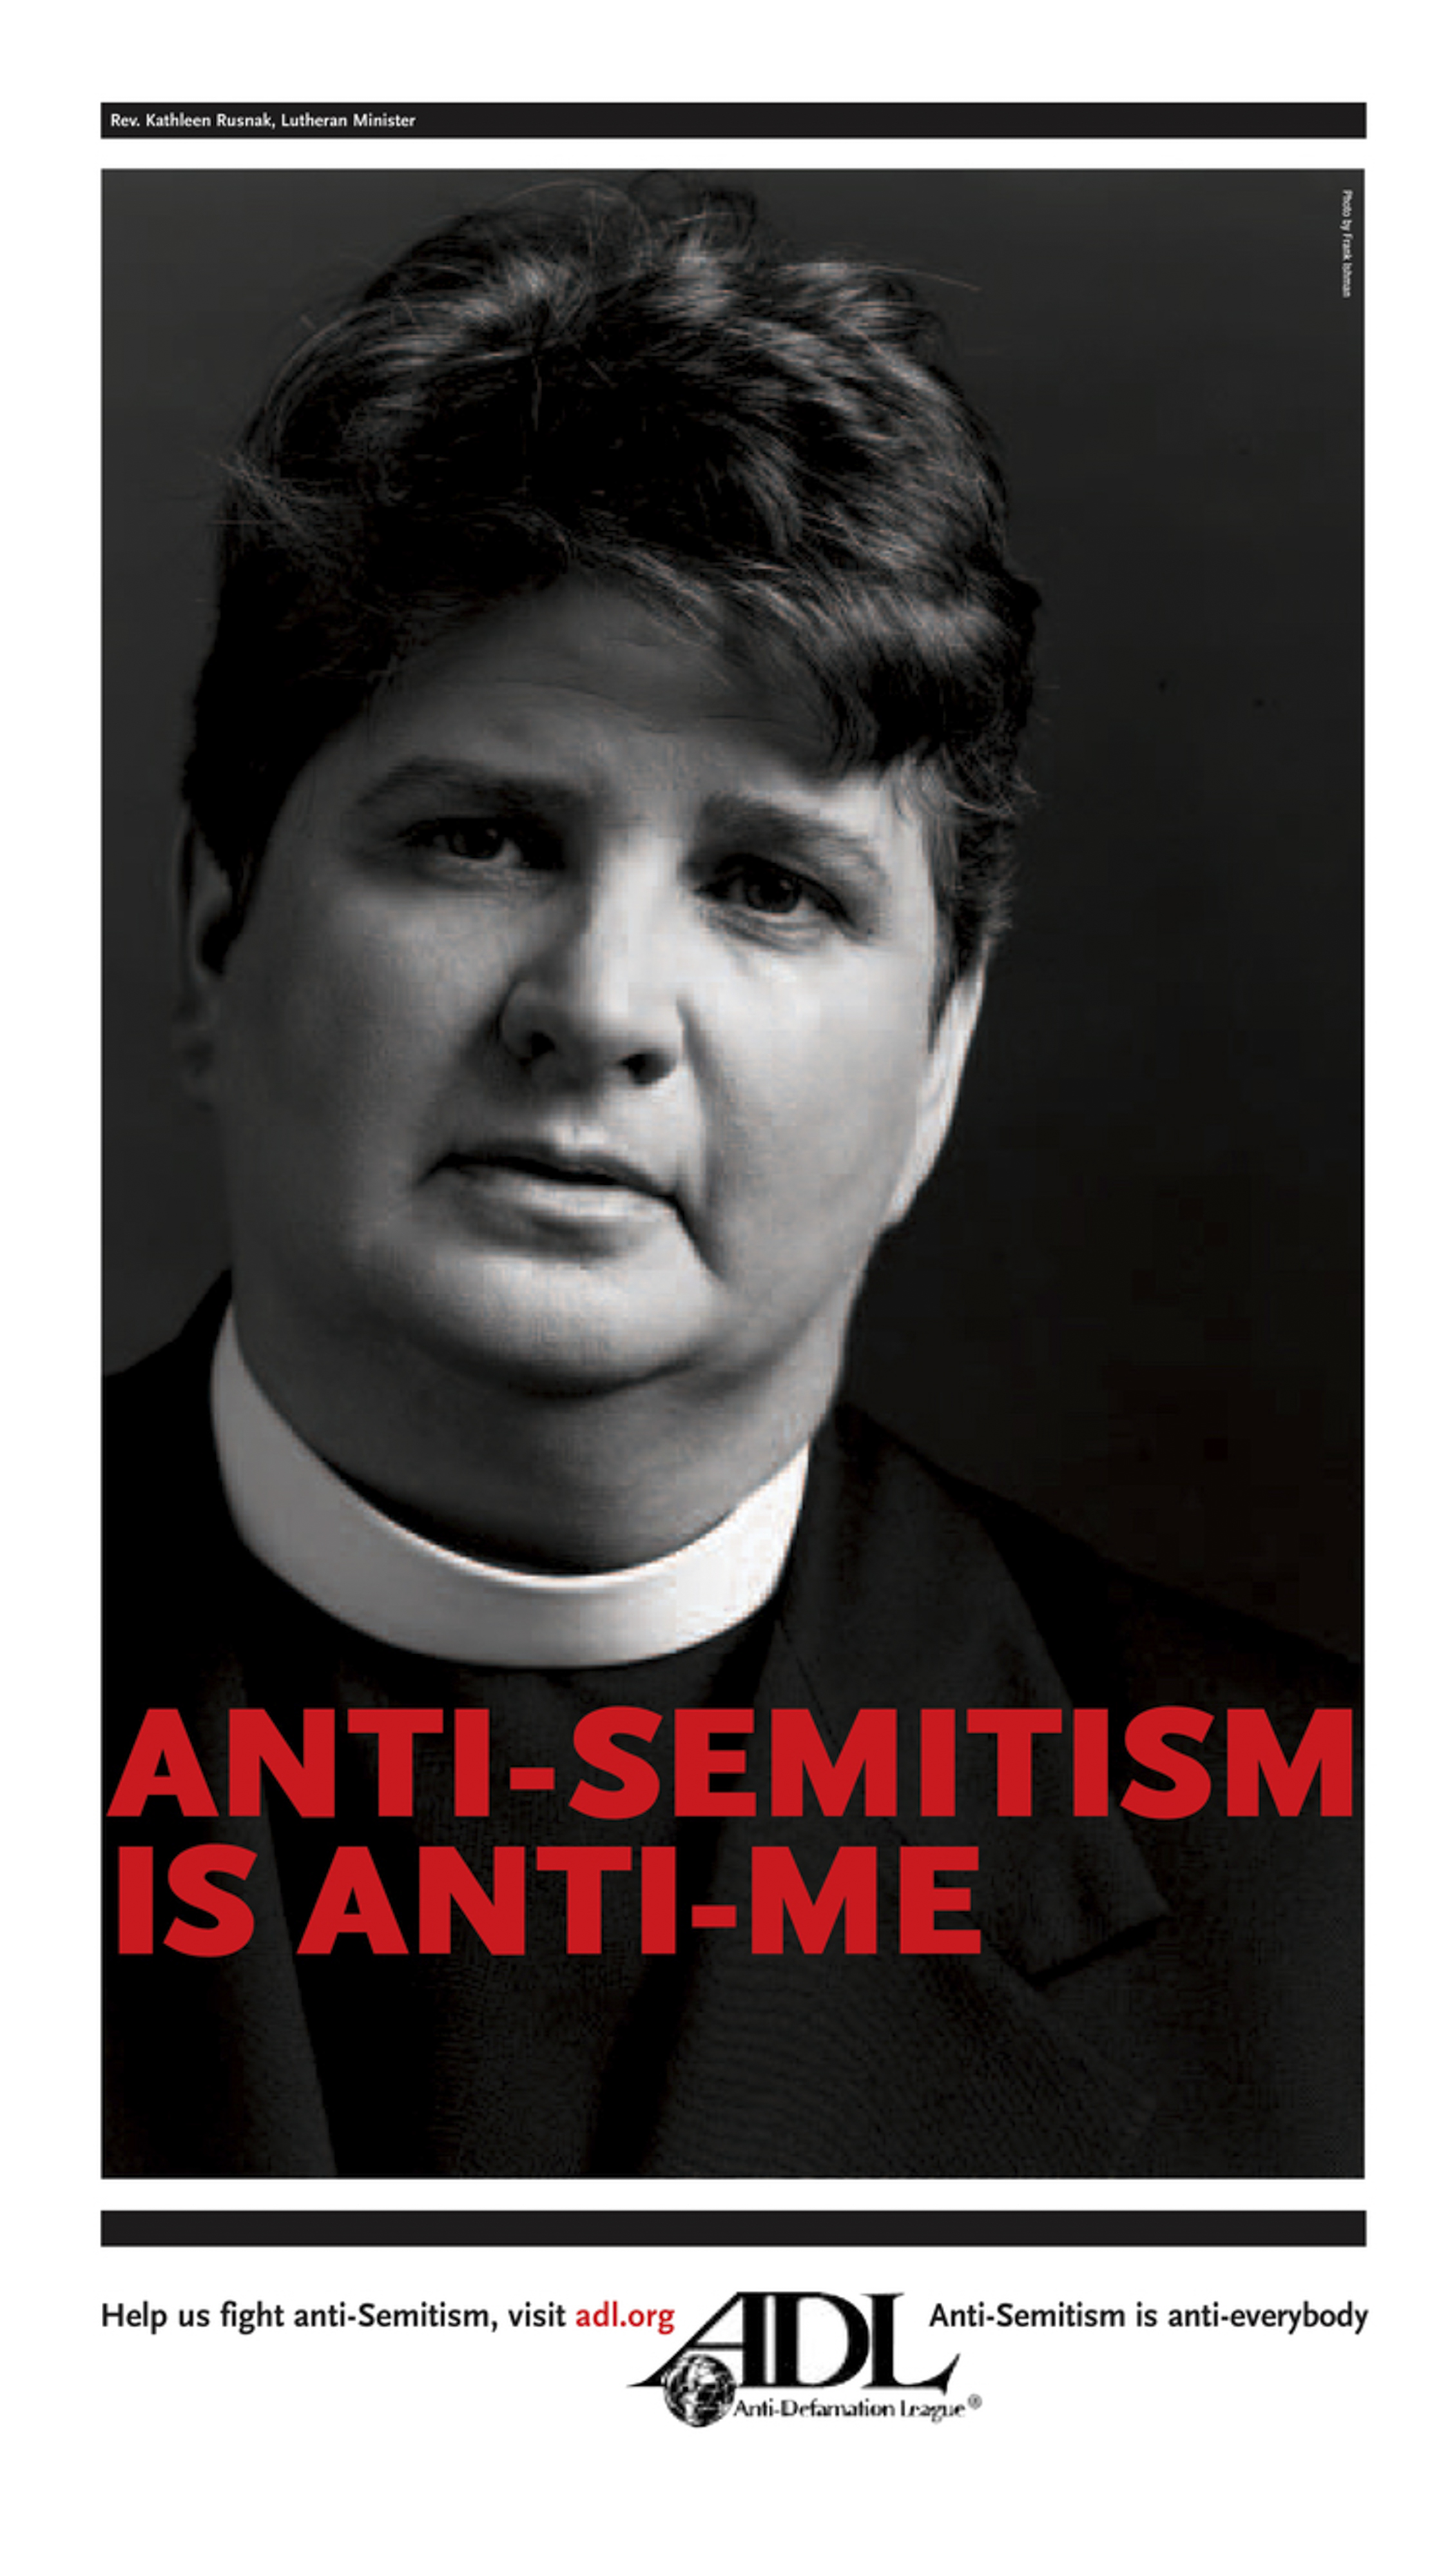 ADL - Anti-Semitism is Anti-Me